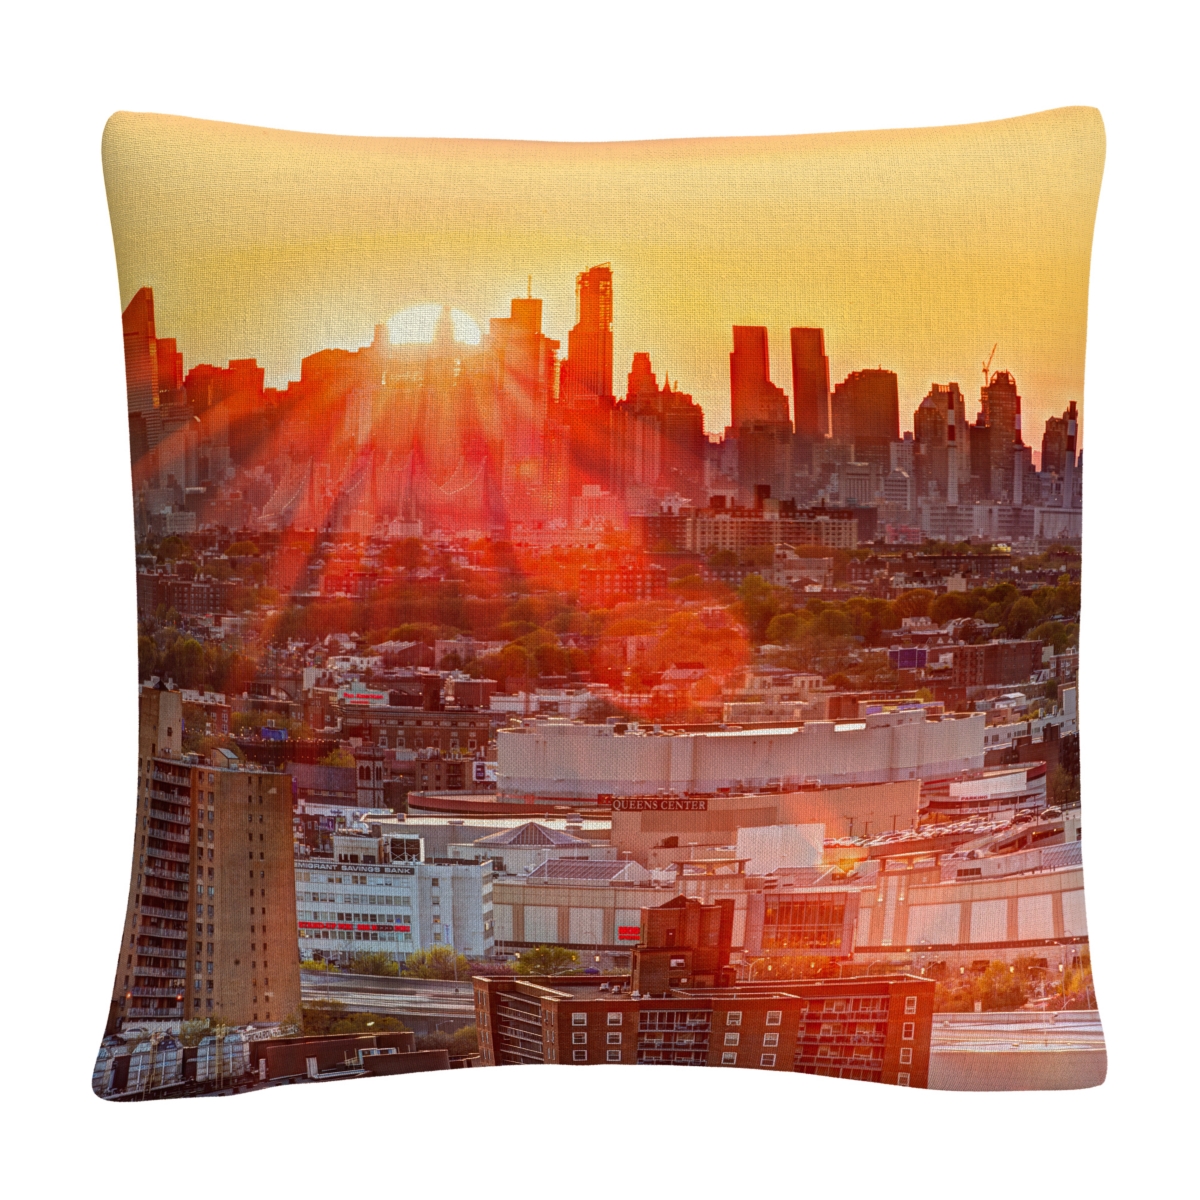 Masters Fine Art Midtown Sunset Orange Cityscape Decorative Pillow, 16 x 16